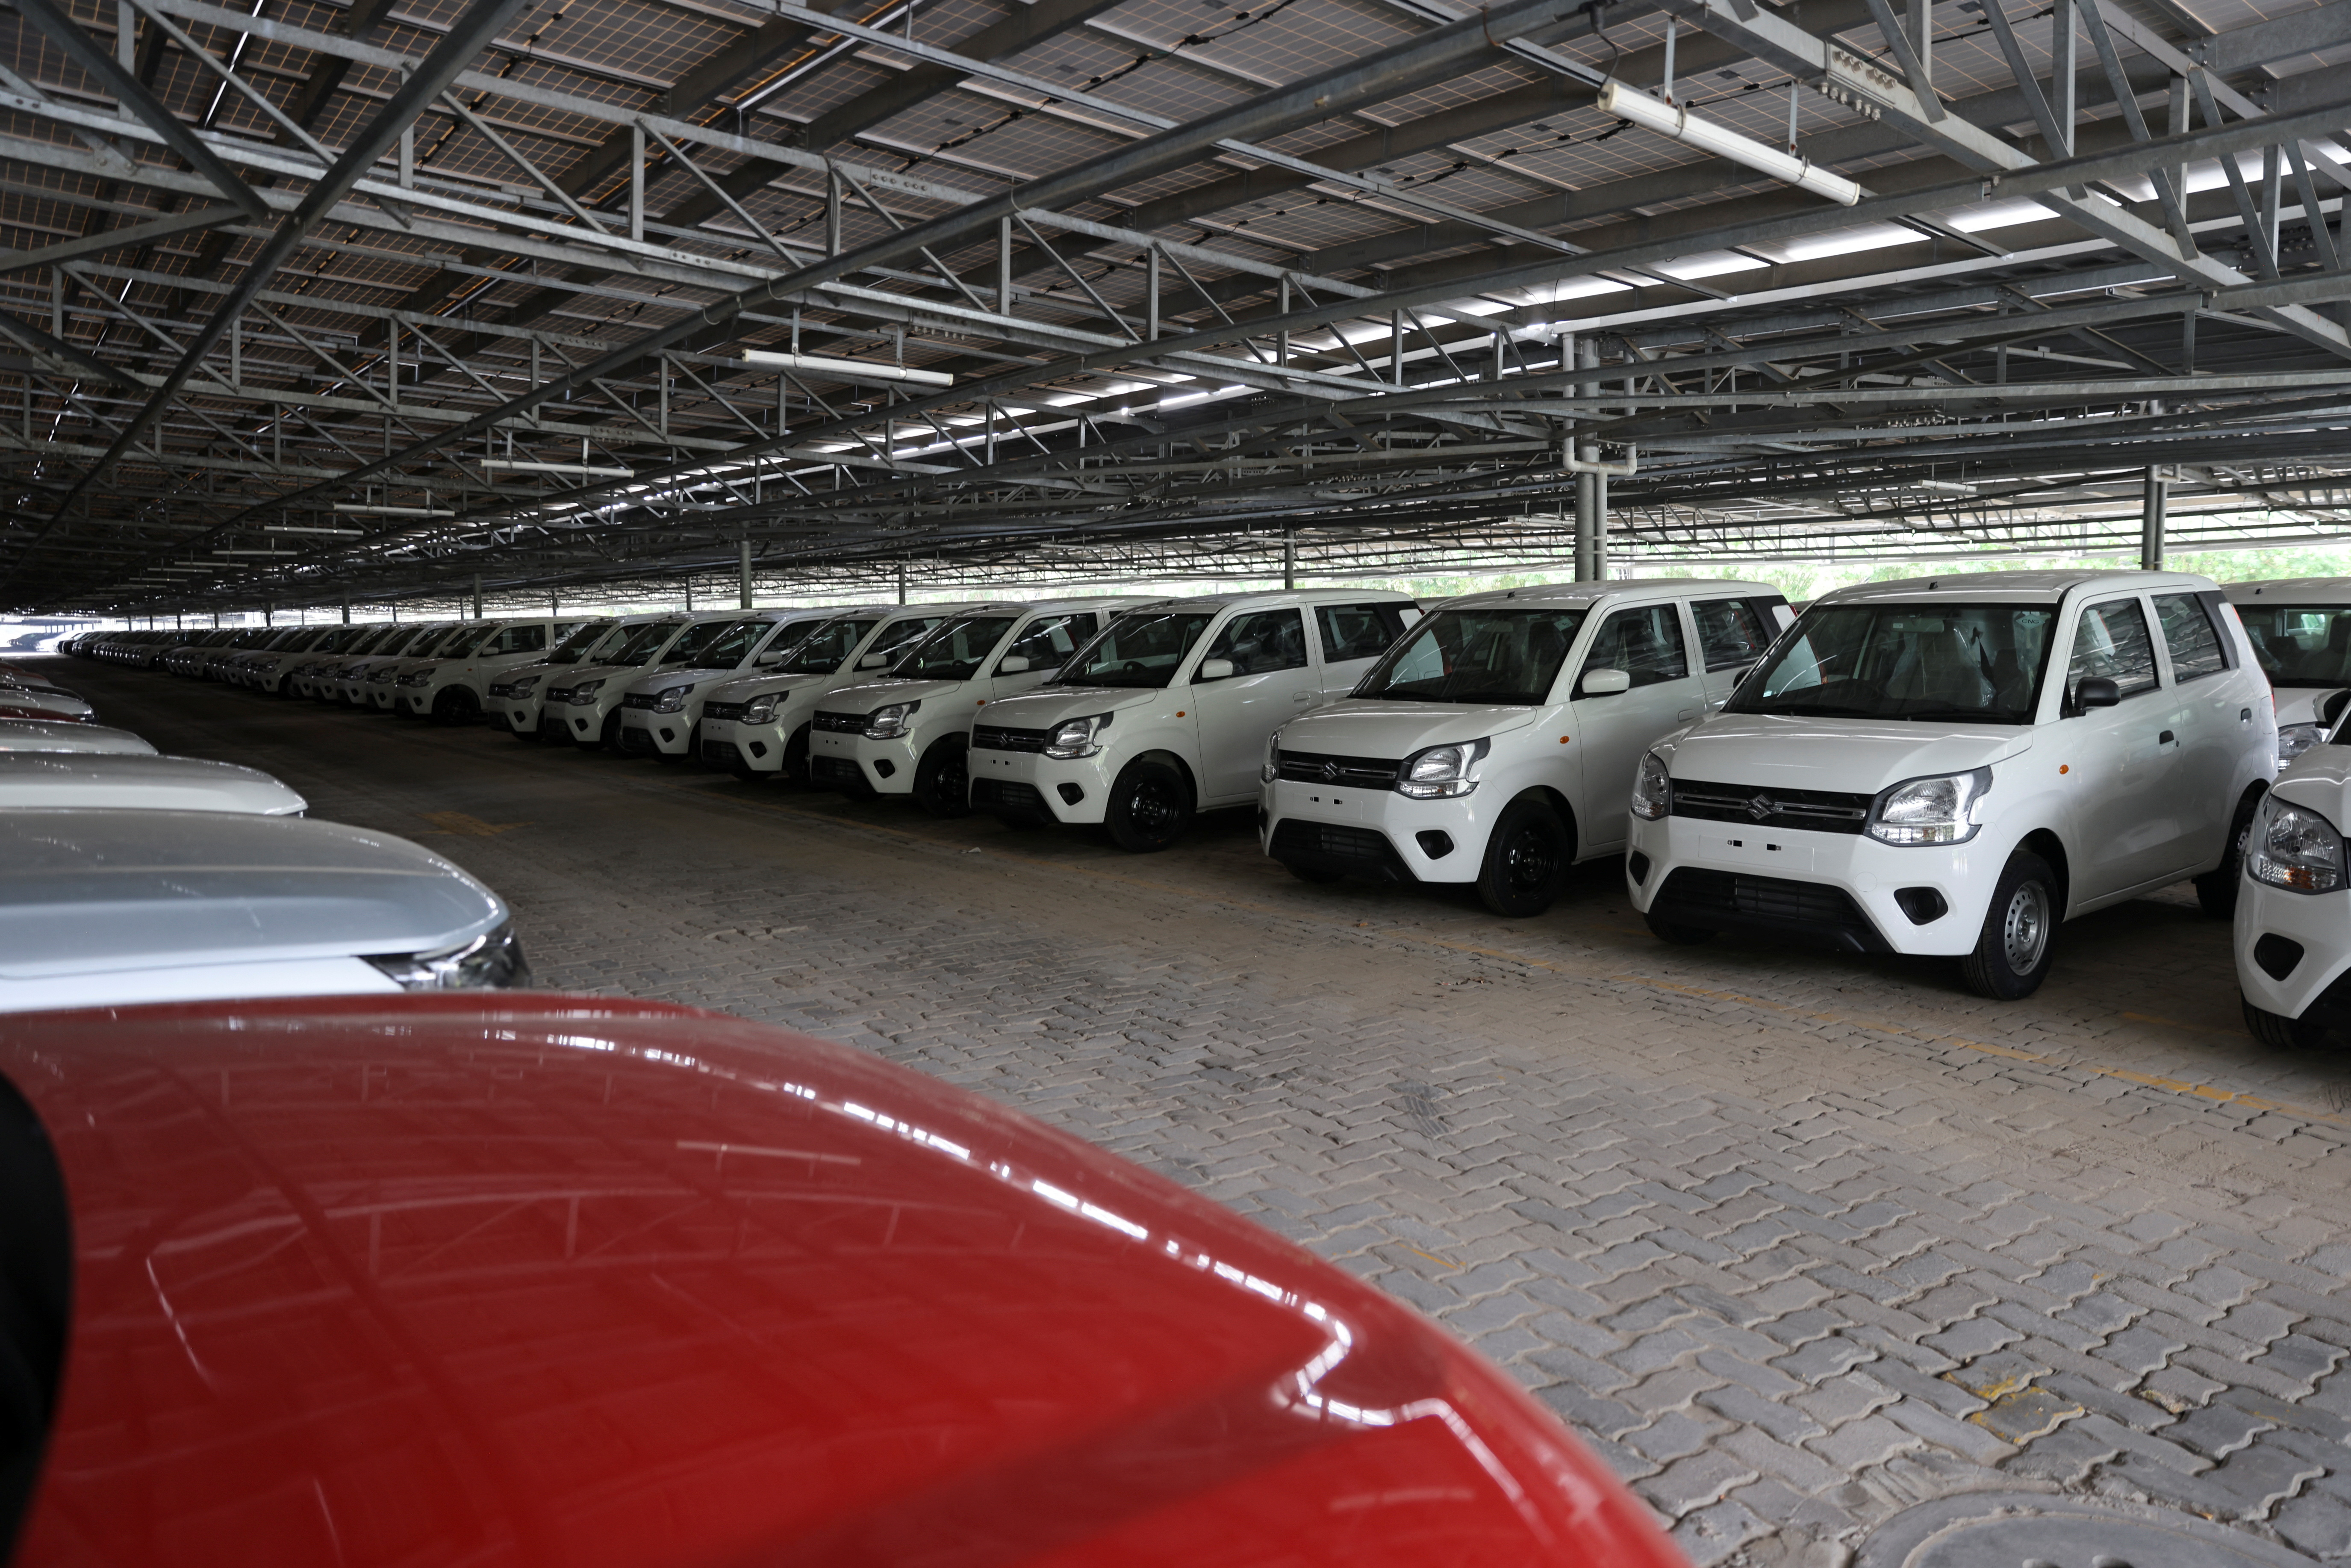 Weak October car sales threaten inventory pile-up, warns Indian